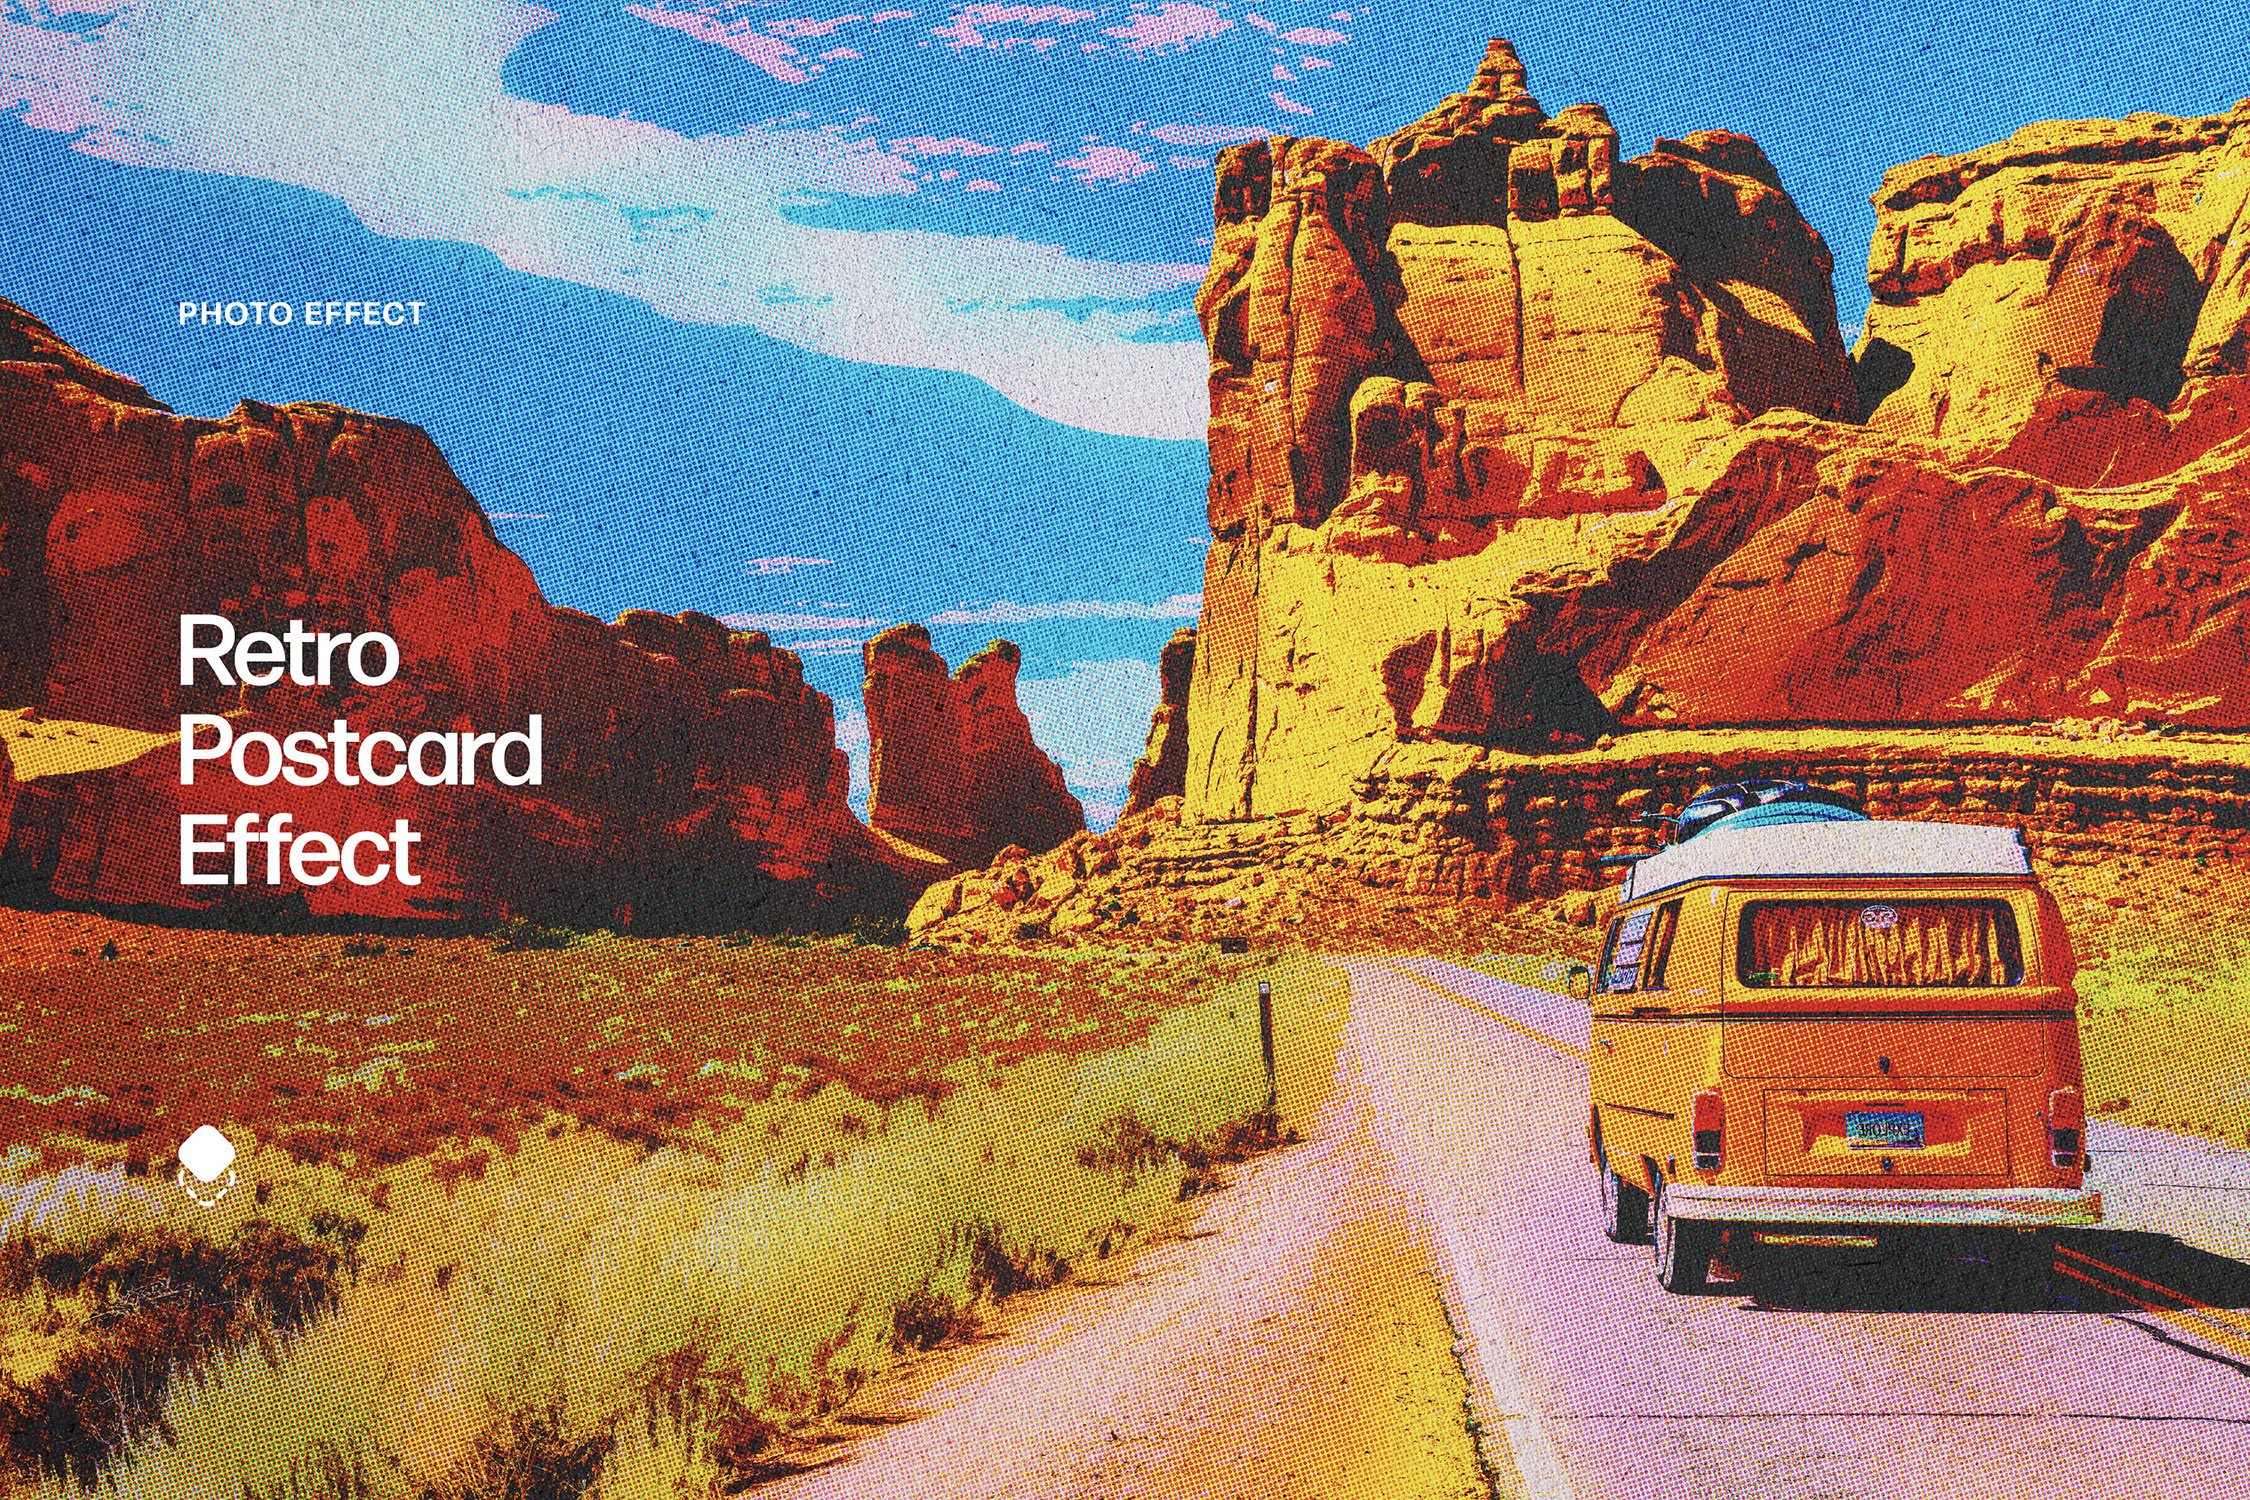 Retro Postcard Effectcover image.